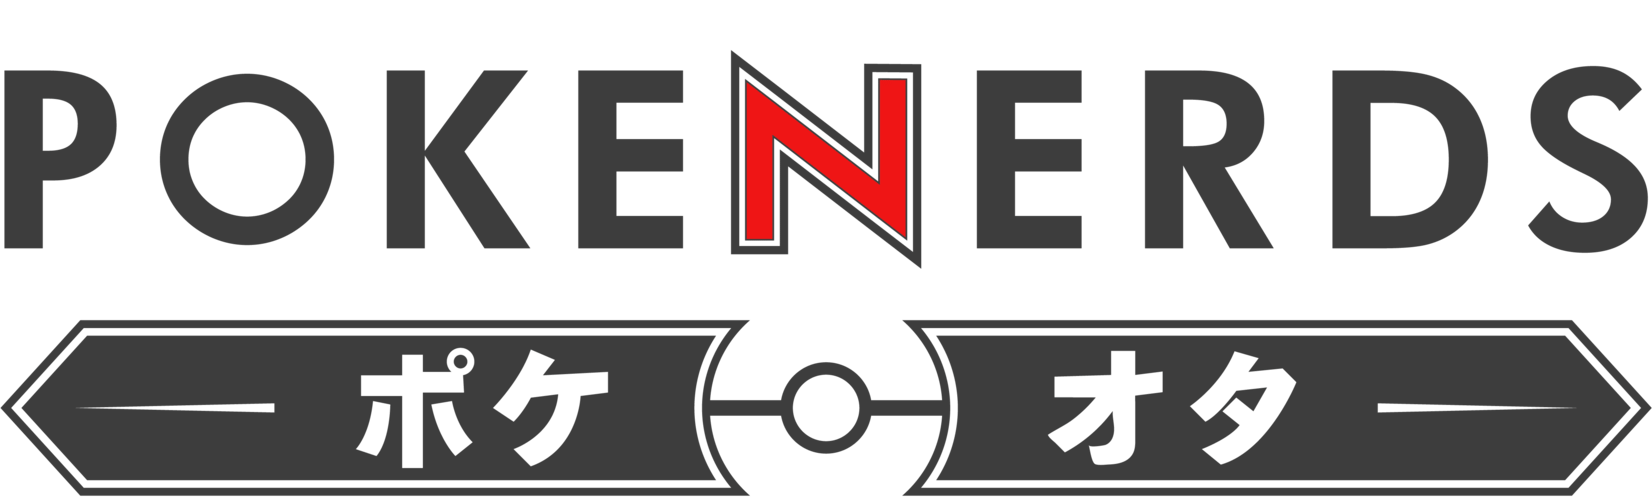 pokenerds-store-logo